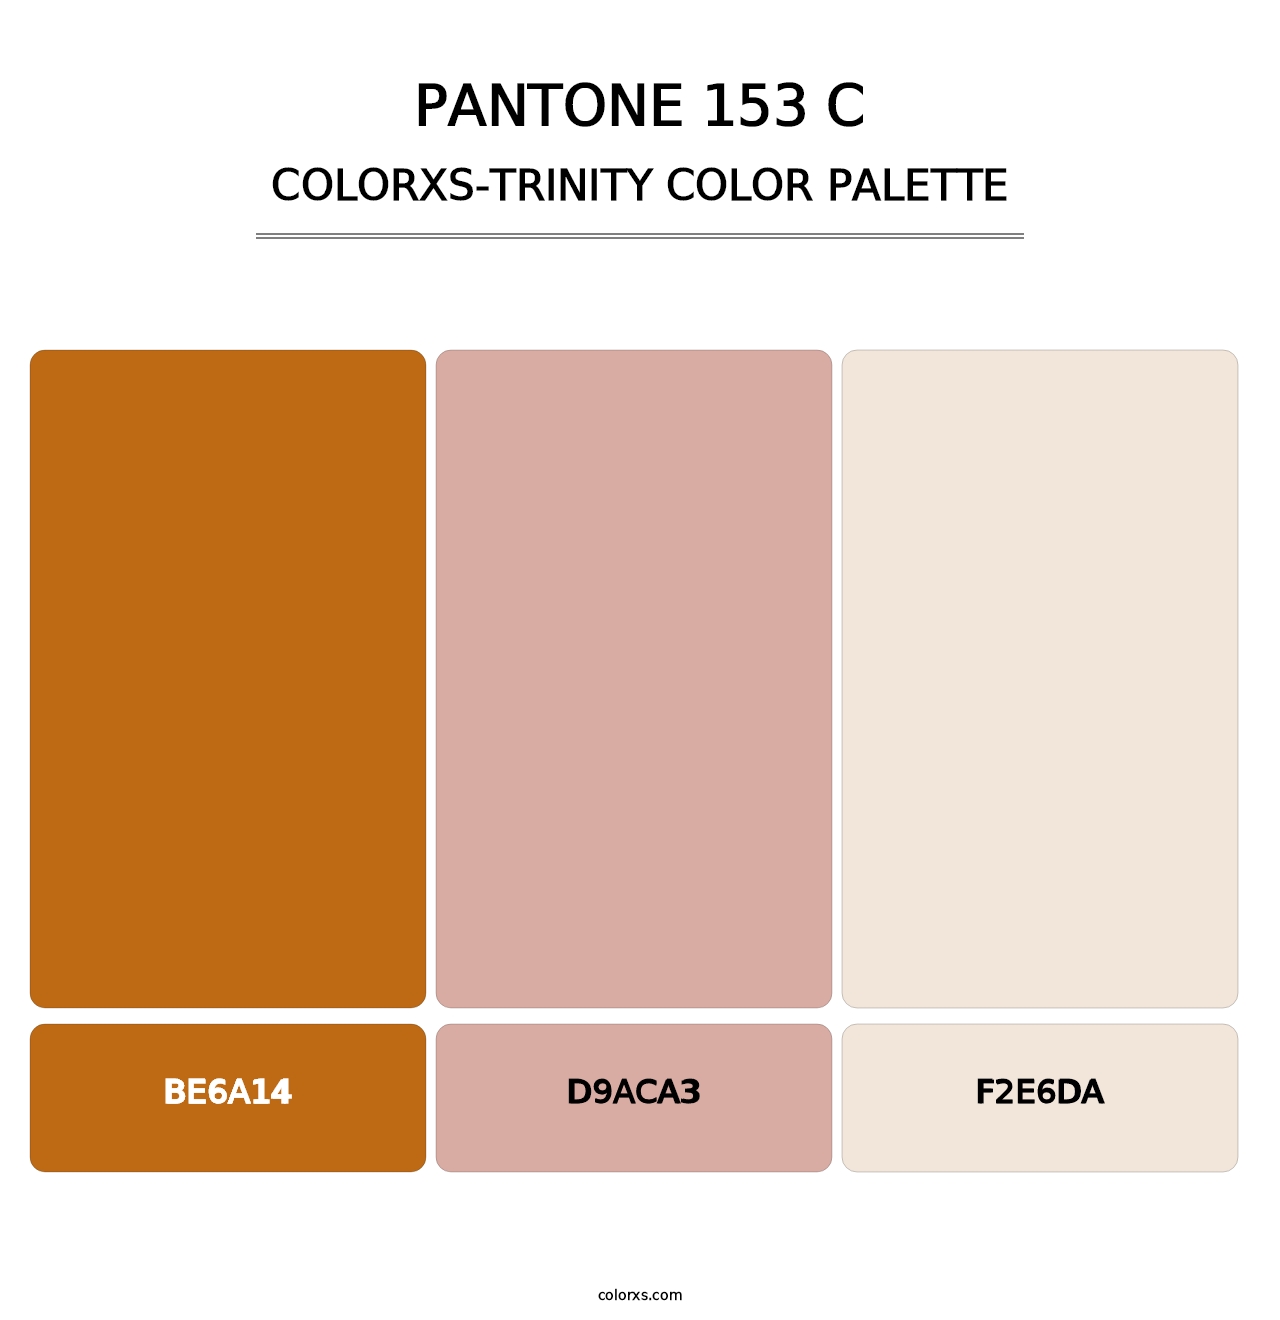 PANTONE 153 C - Colorxs Trinity Palette